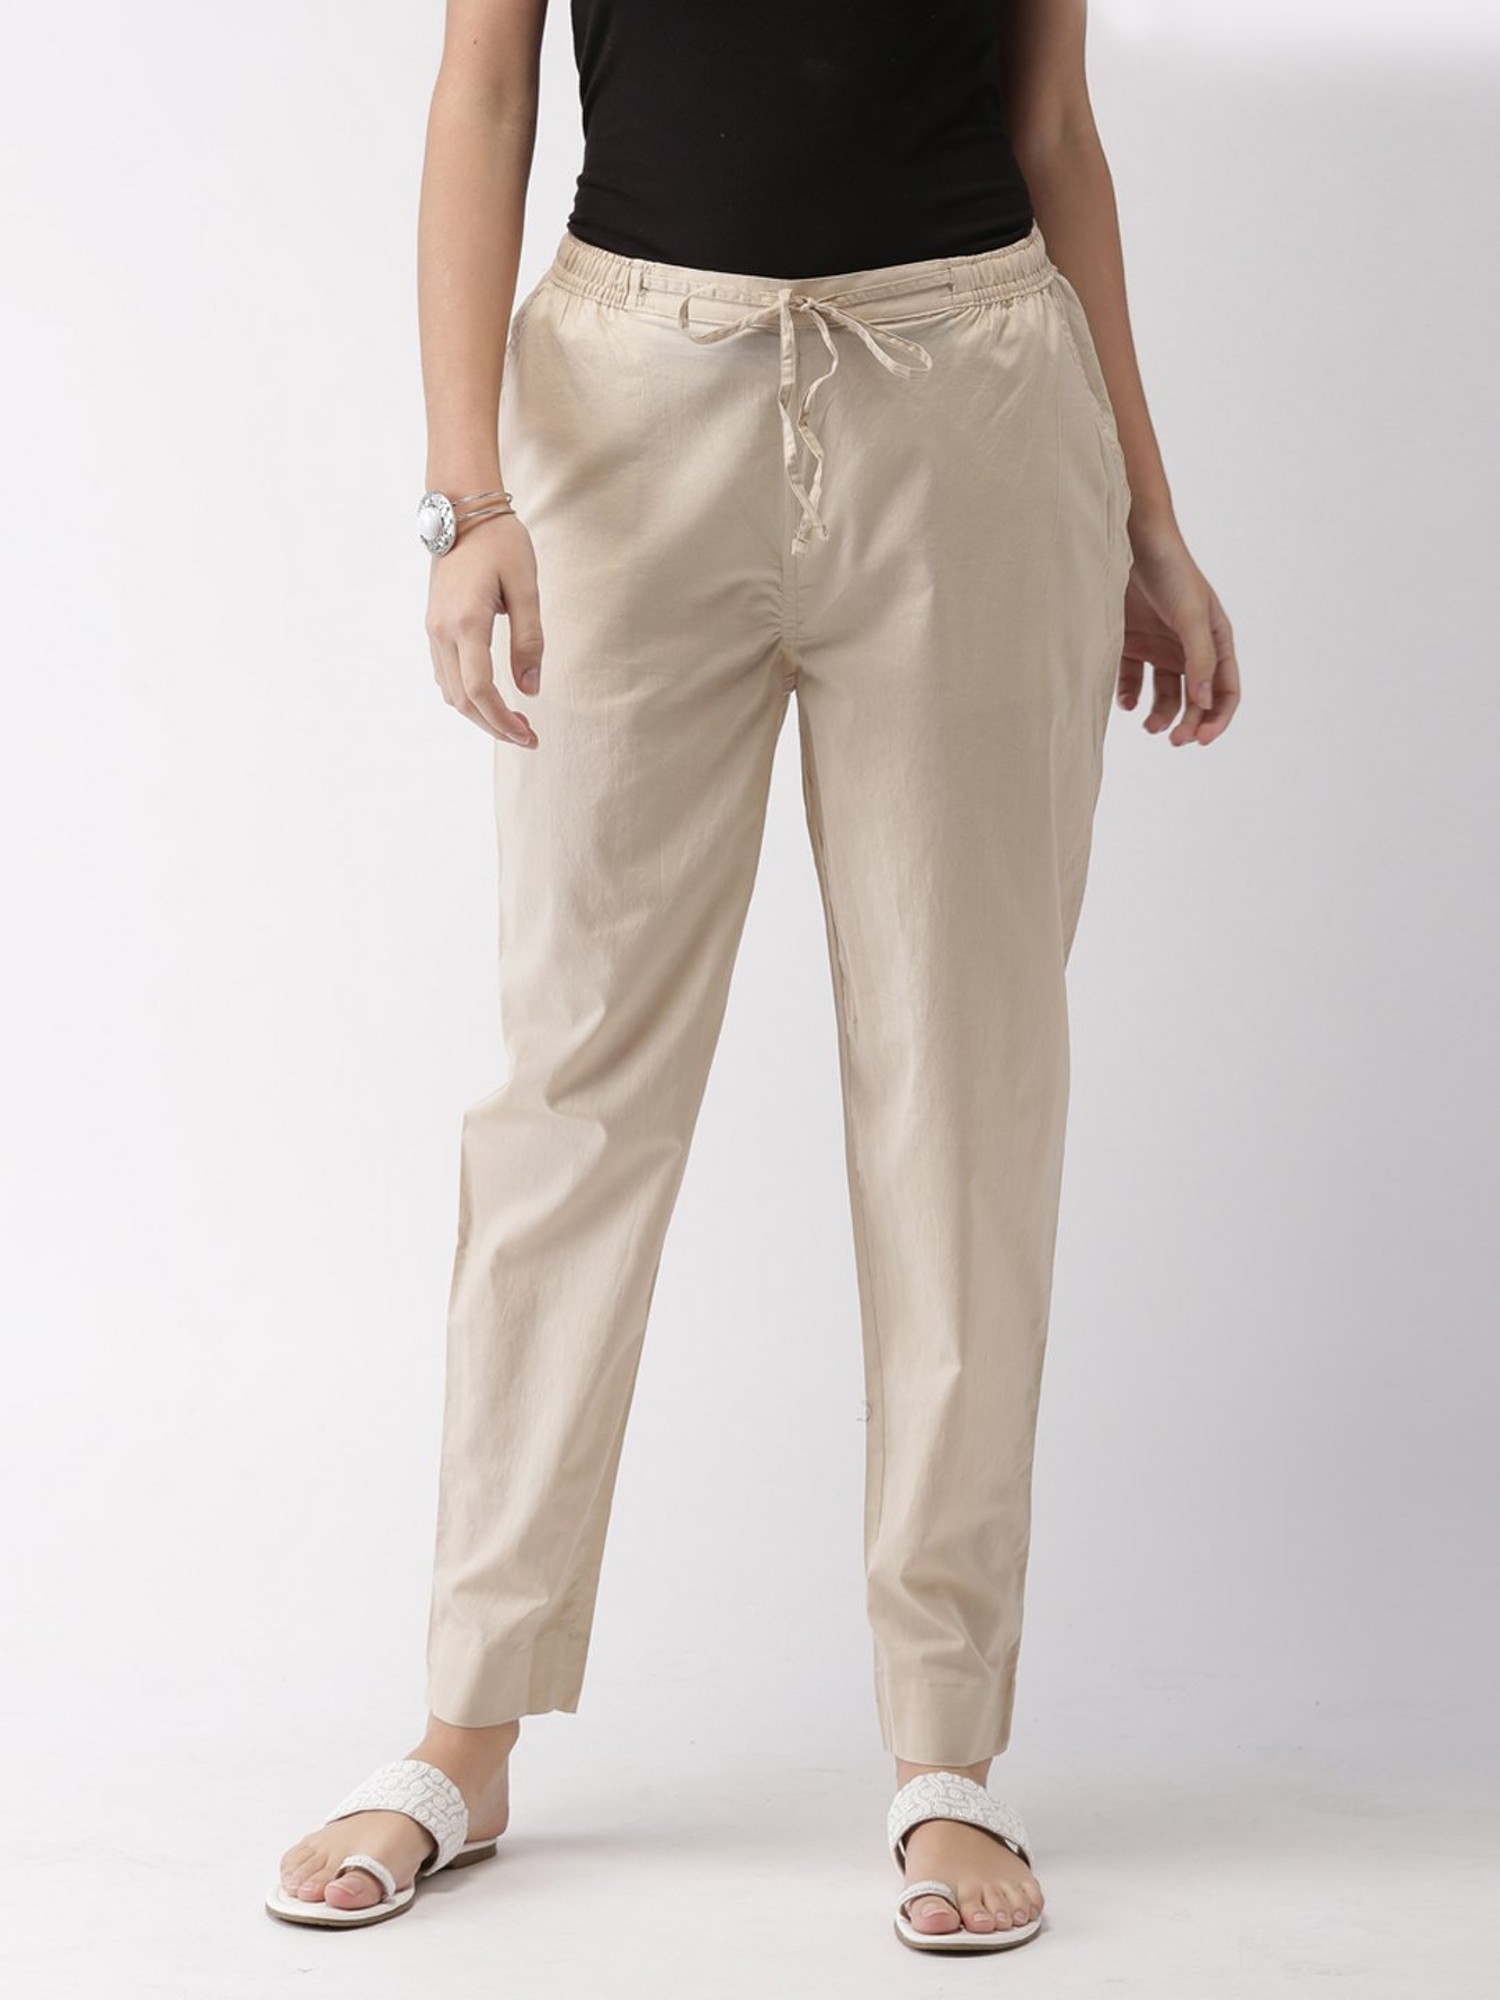 Buy Maroon Pants for Women by GO COLORS Online  Ajiocom